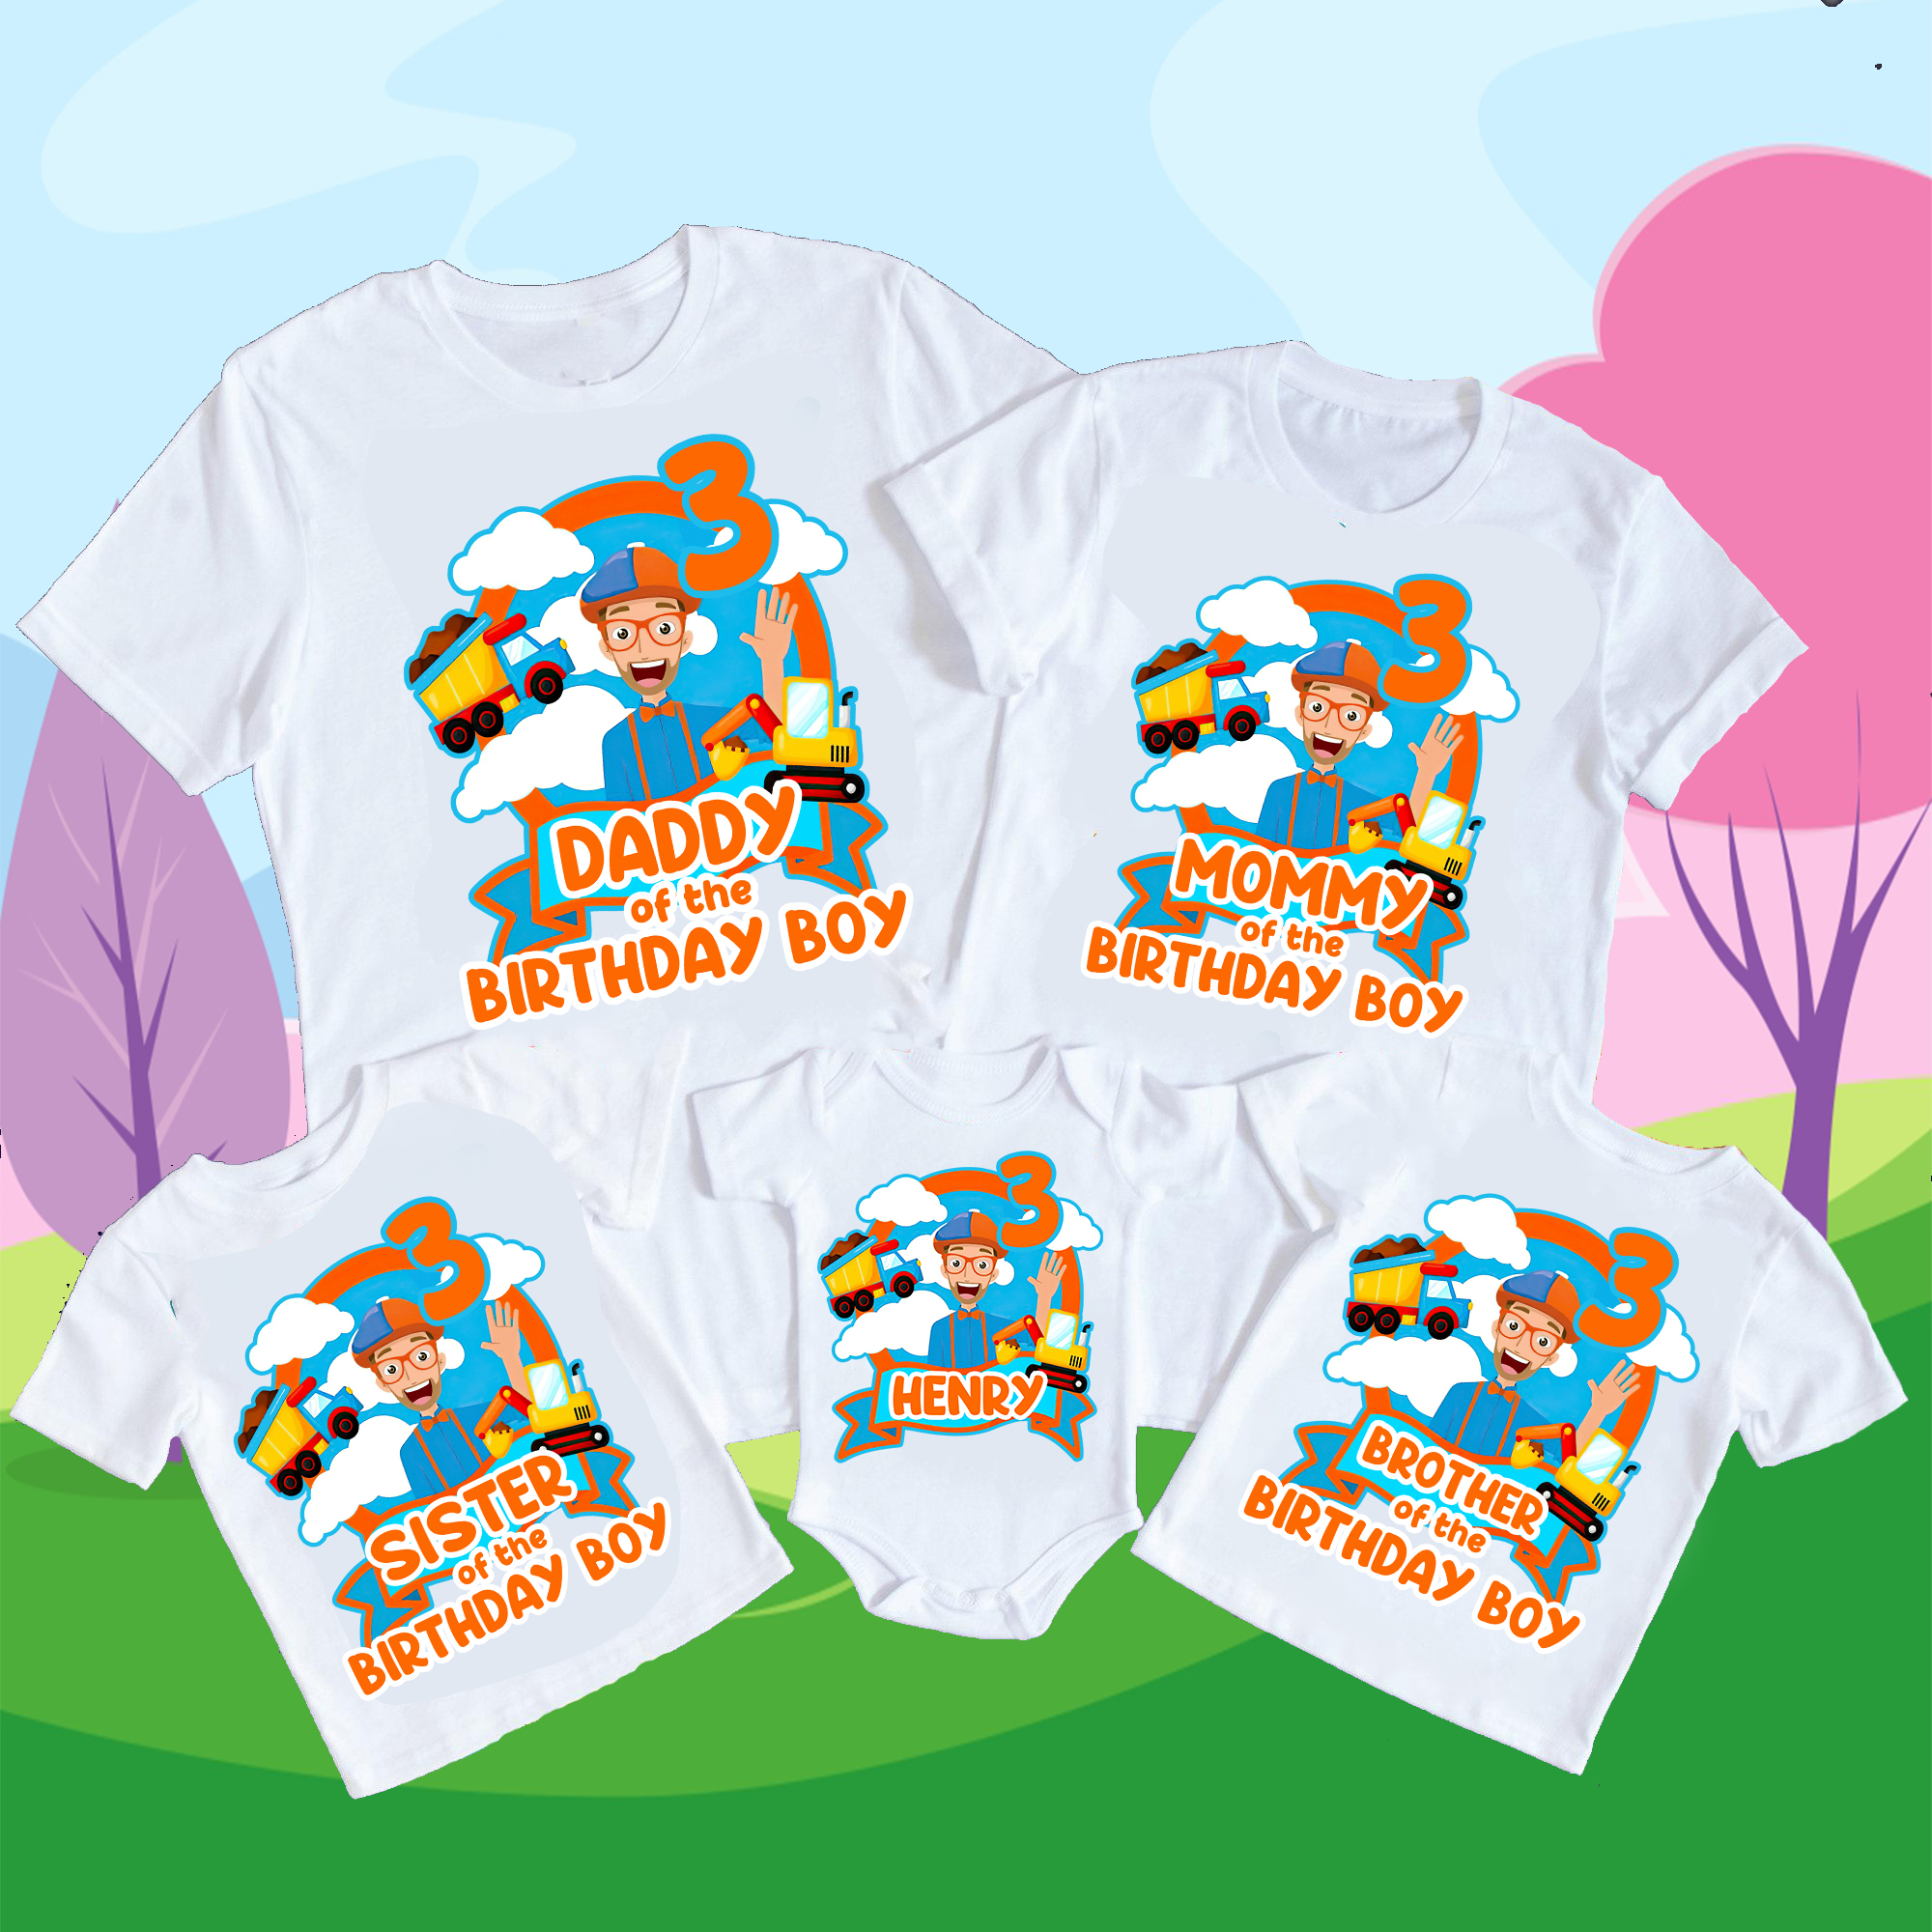 Personalized Blippi Birthday Shirts, Family Blippi shirts, Blippi birthday Theme Shirts, Matching Family Party Shirts